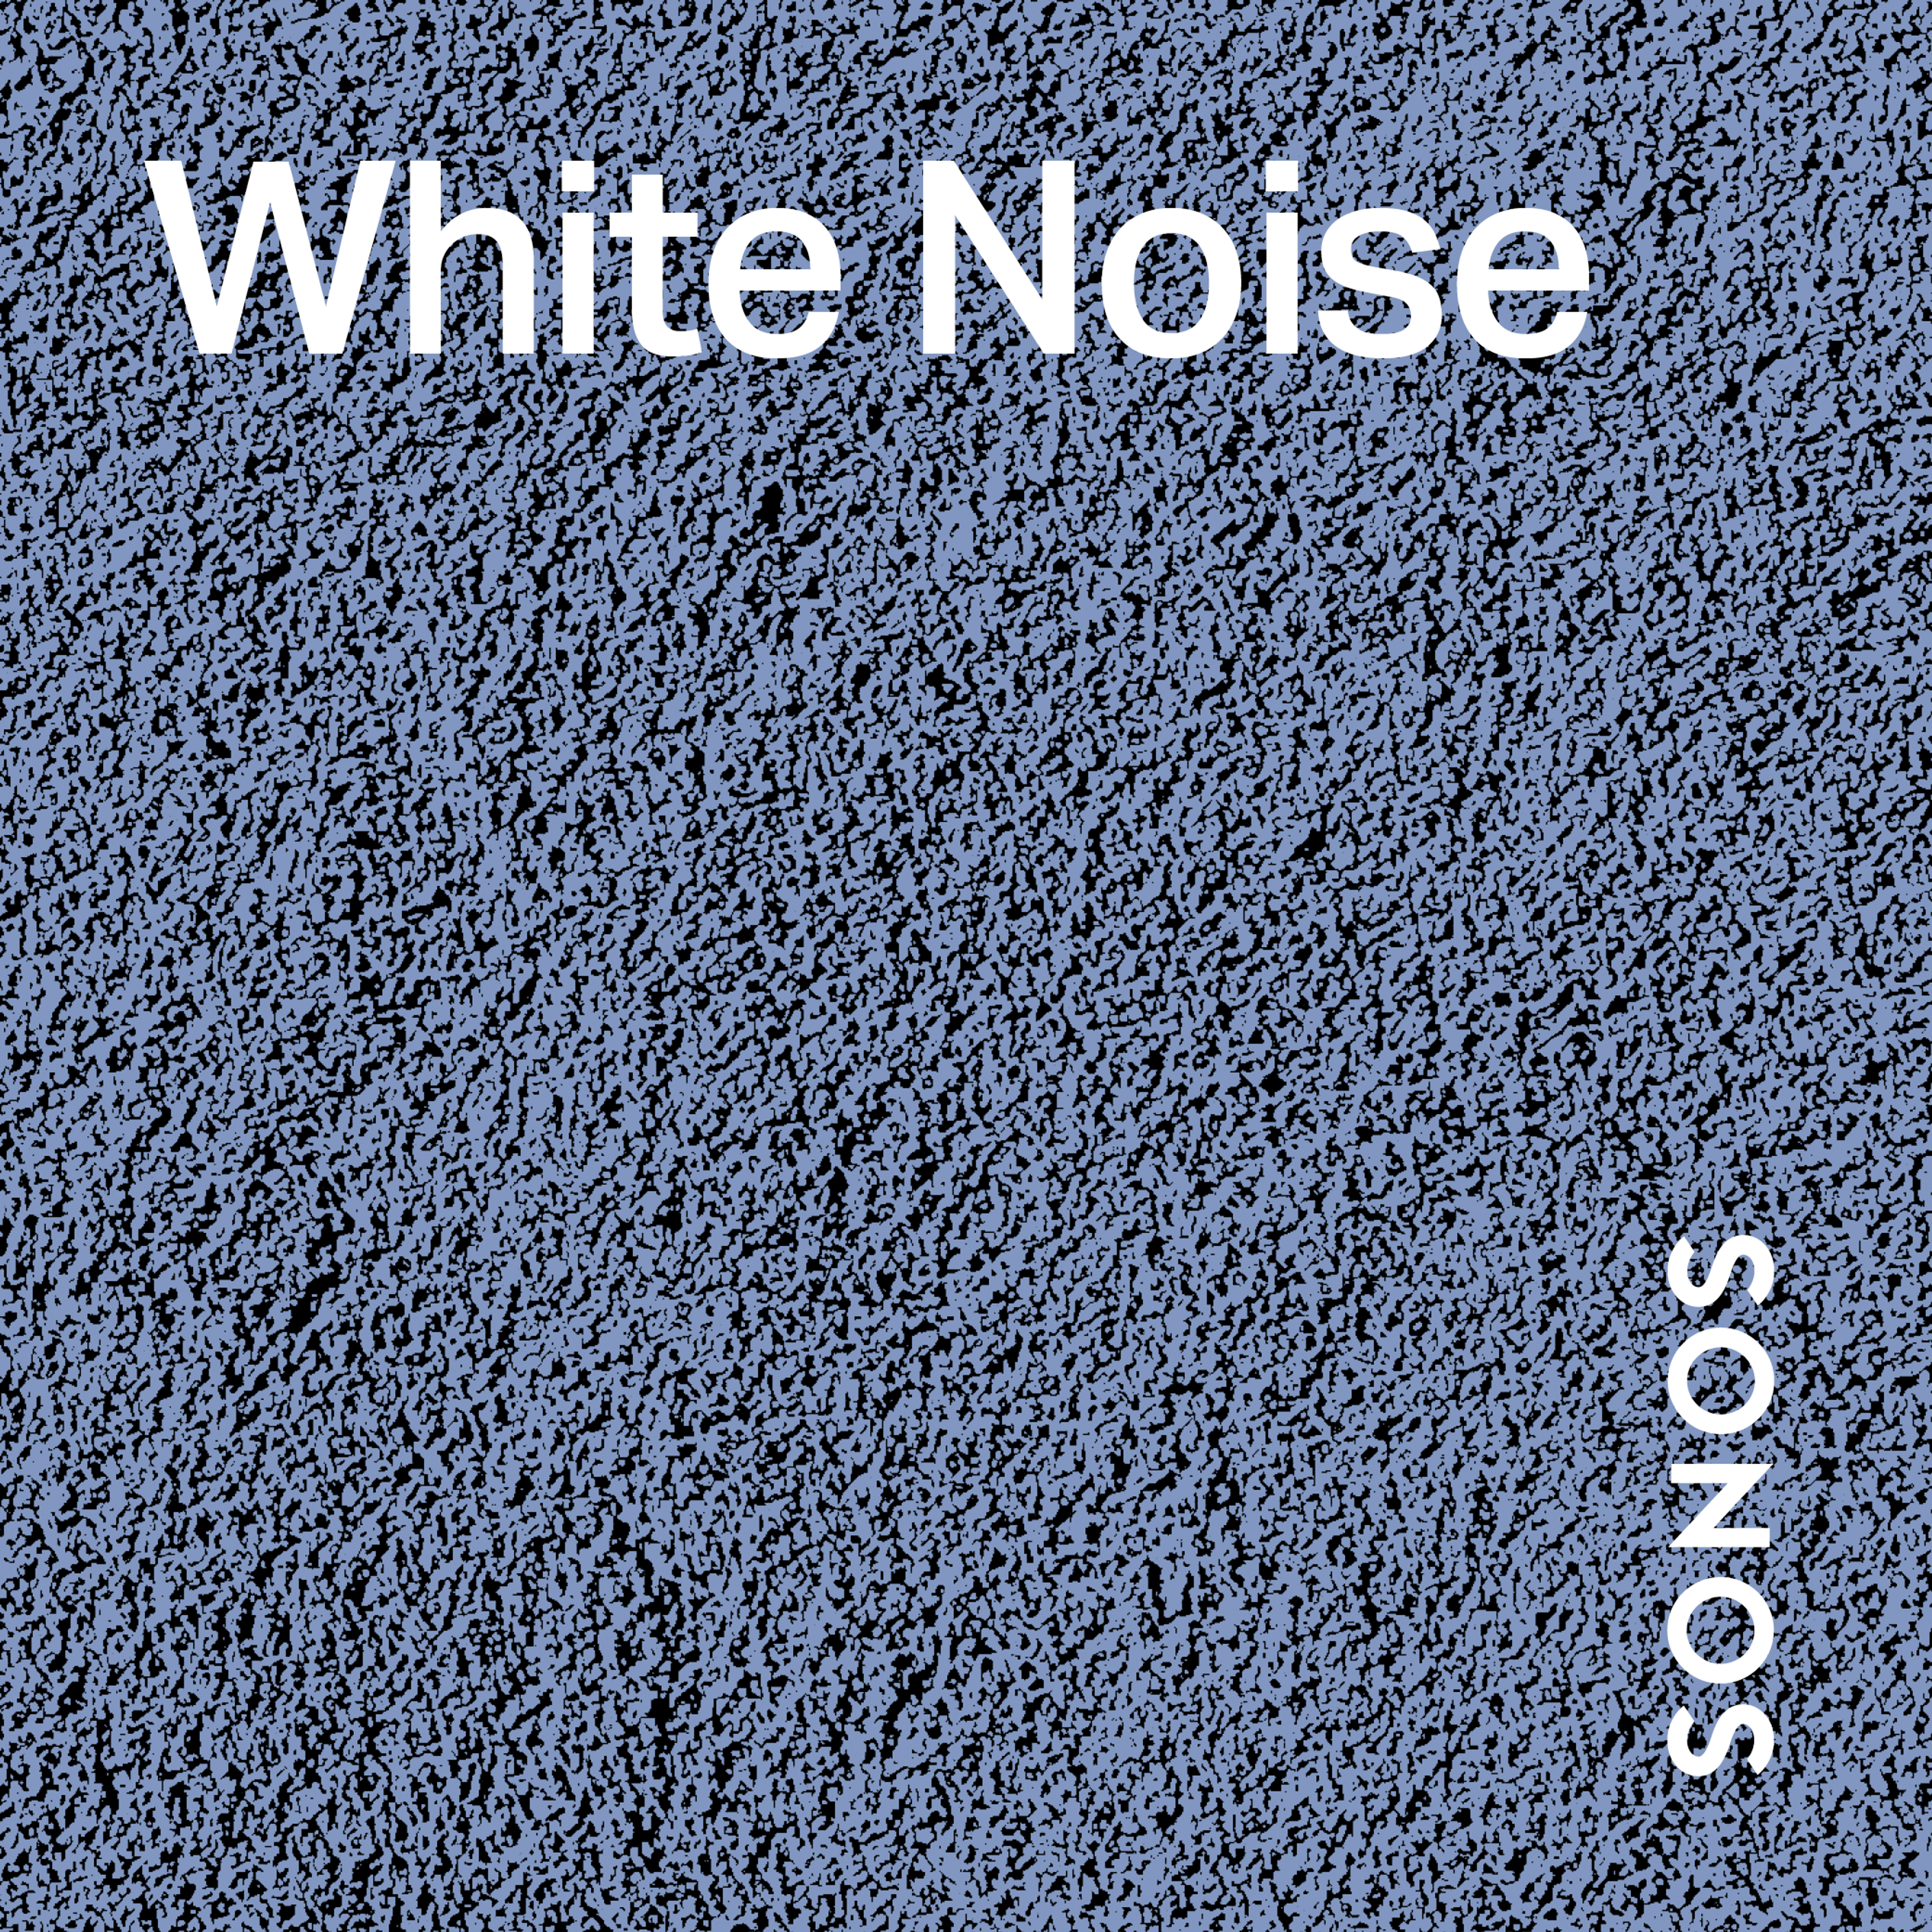 White Noise radio station cover